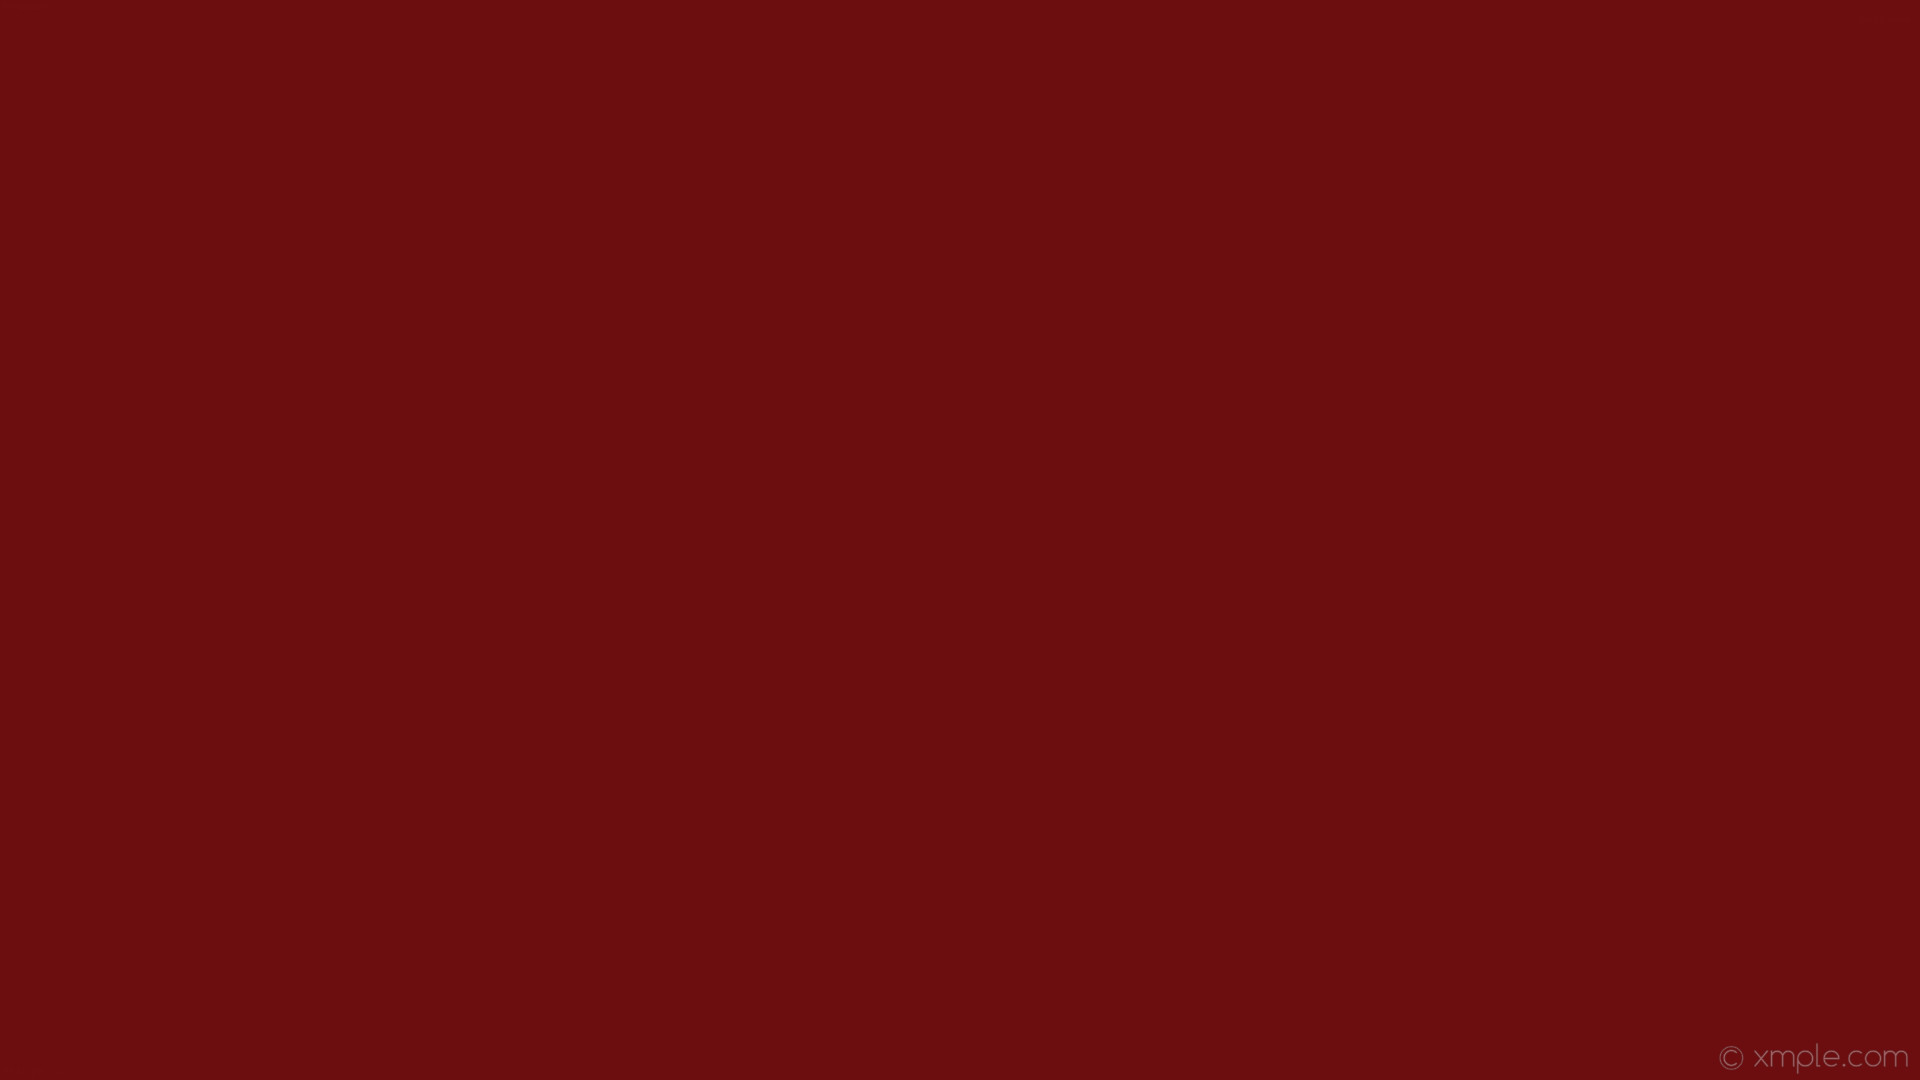 1920x1080 wallpaper single solid color red one colour plain #6c0d0f